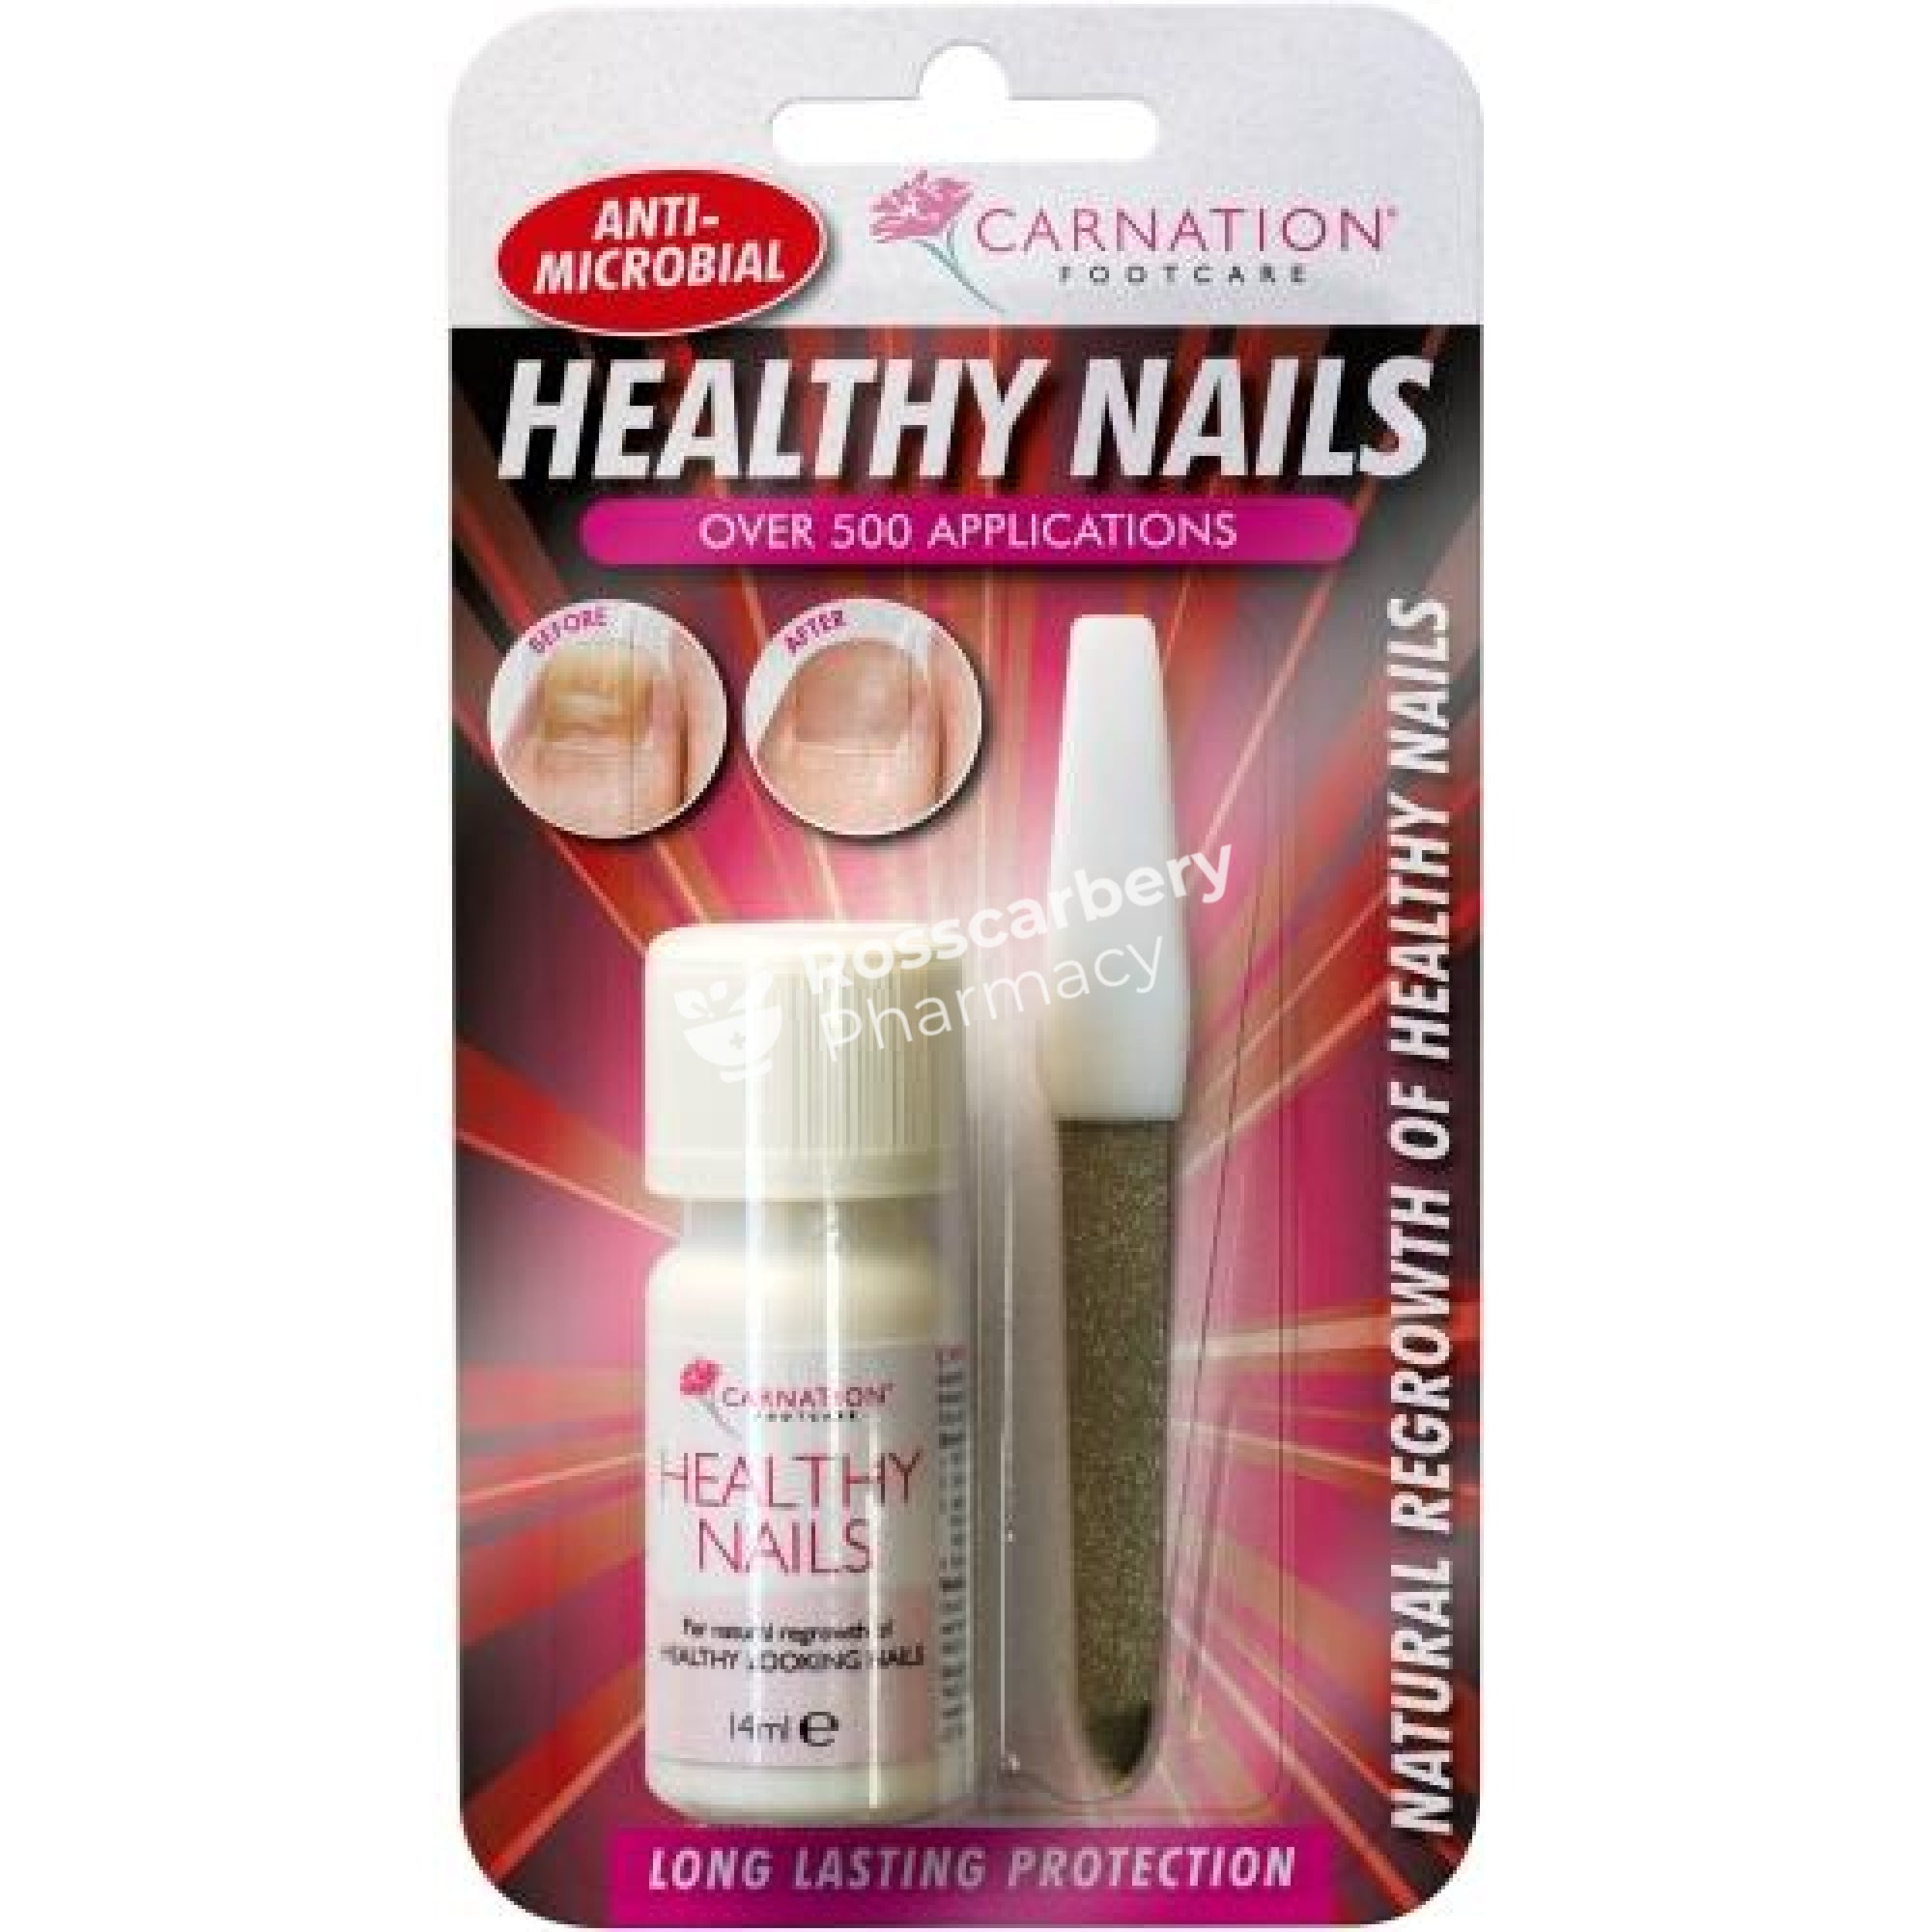 Carnation Footcare Healthy Nails Toe & Nail Care